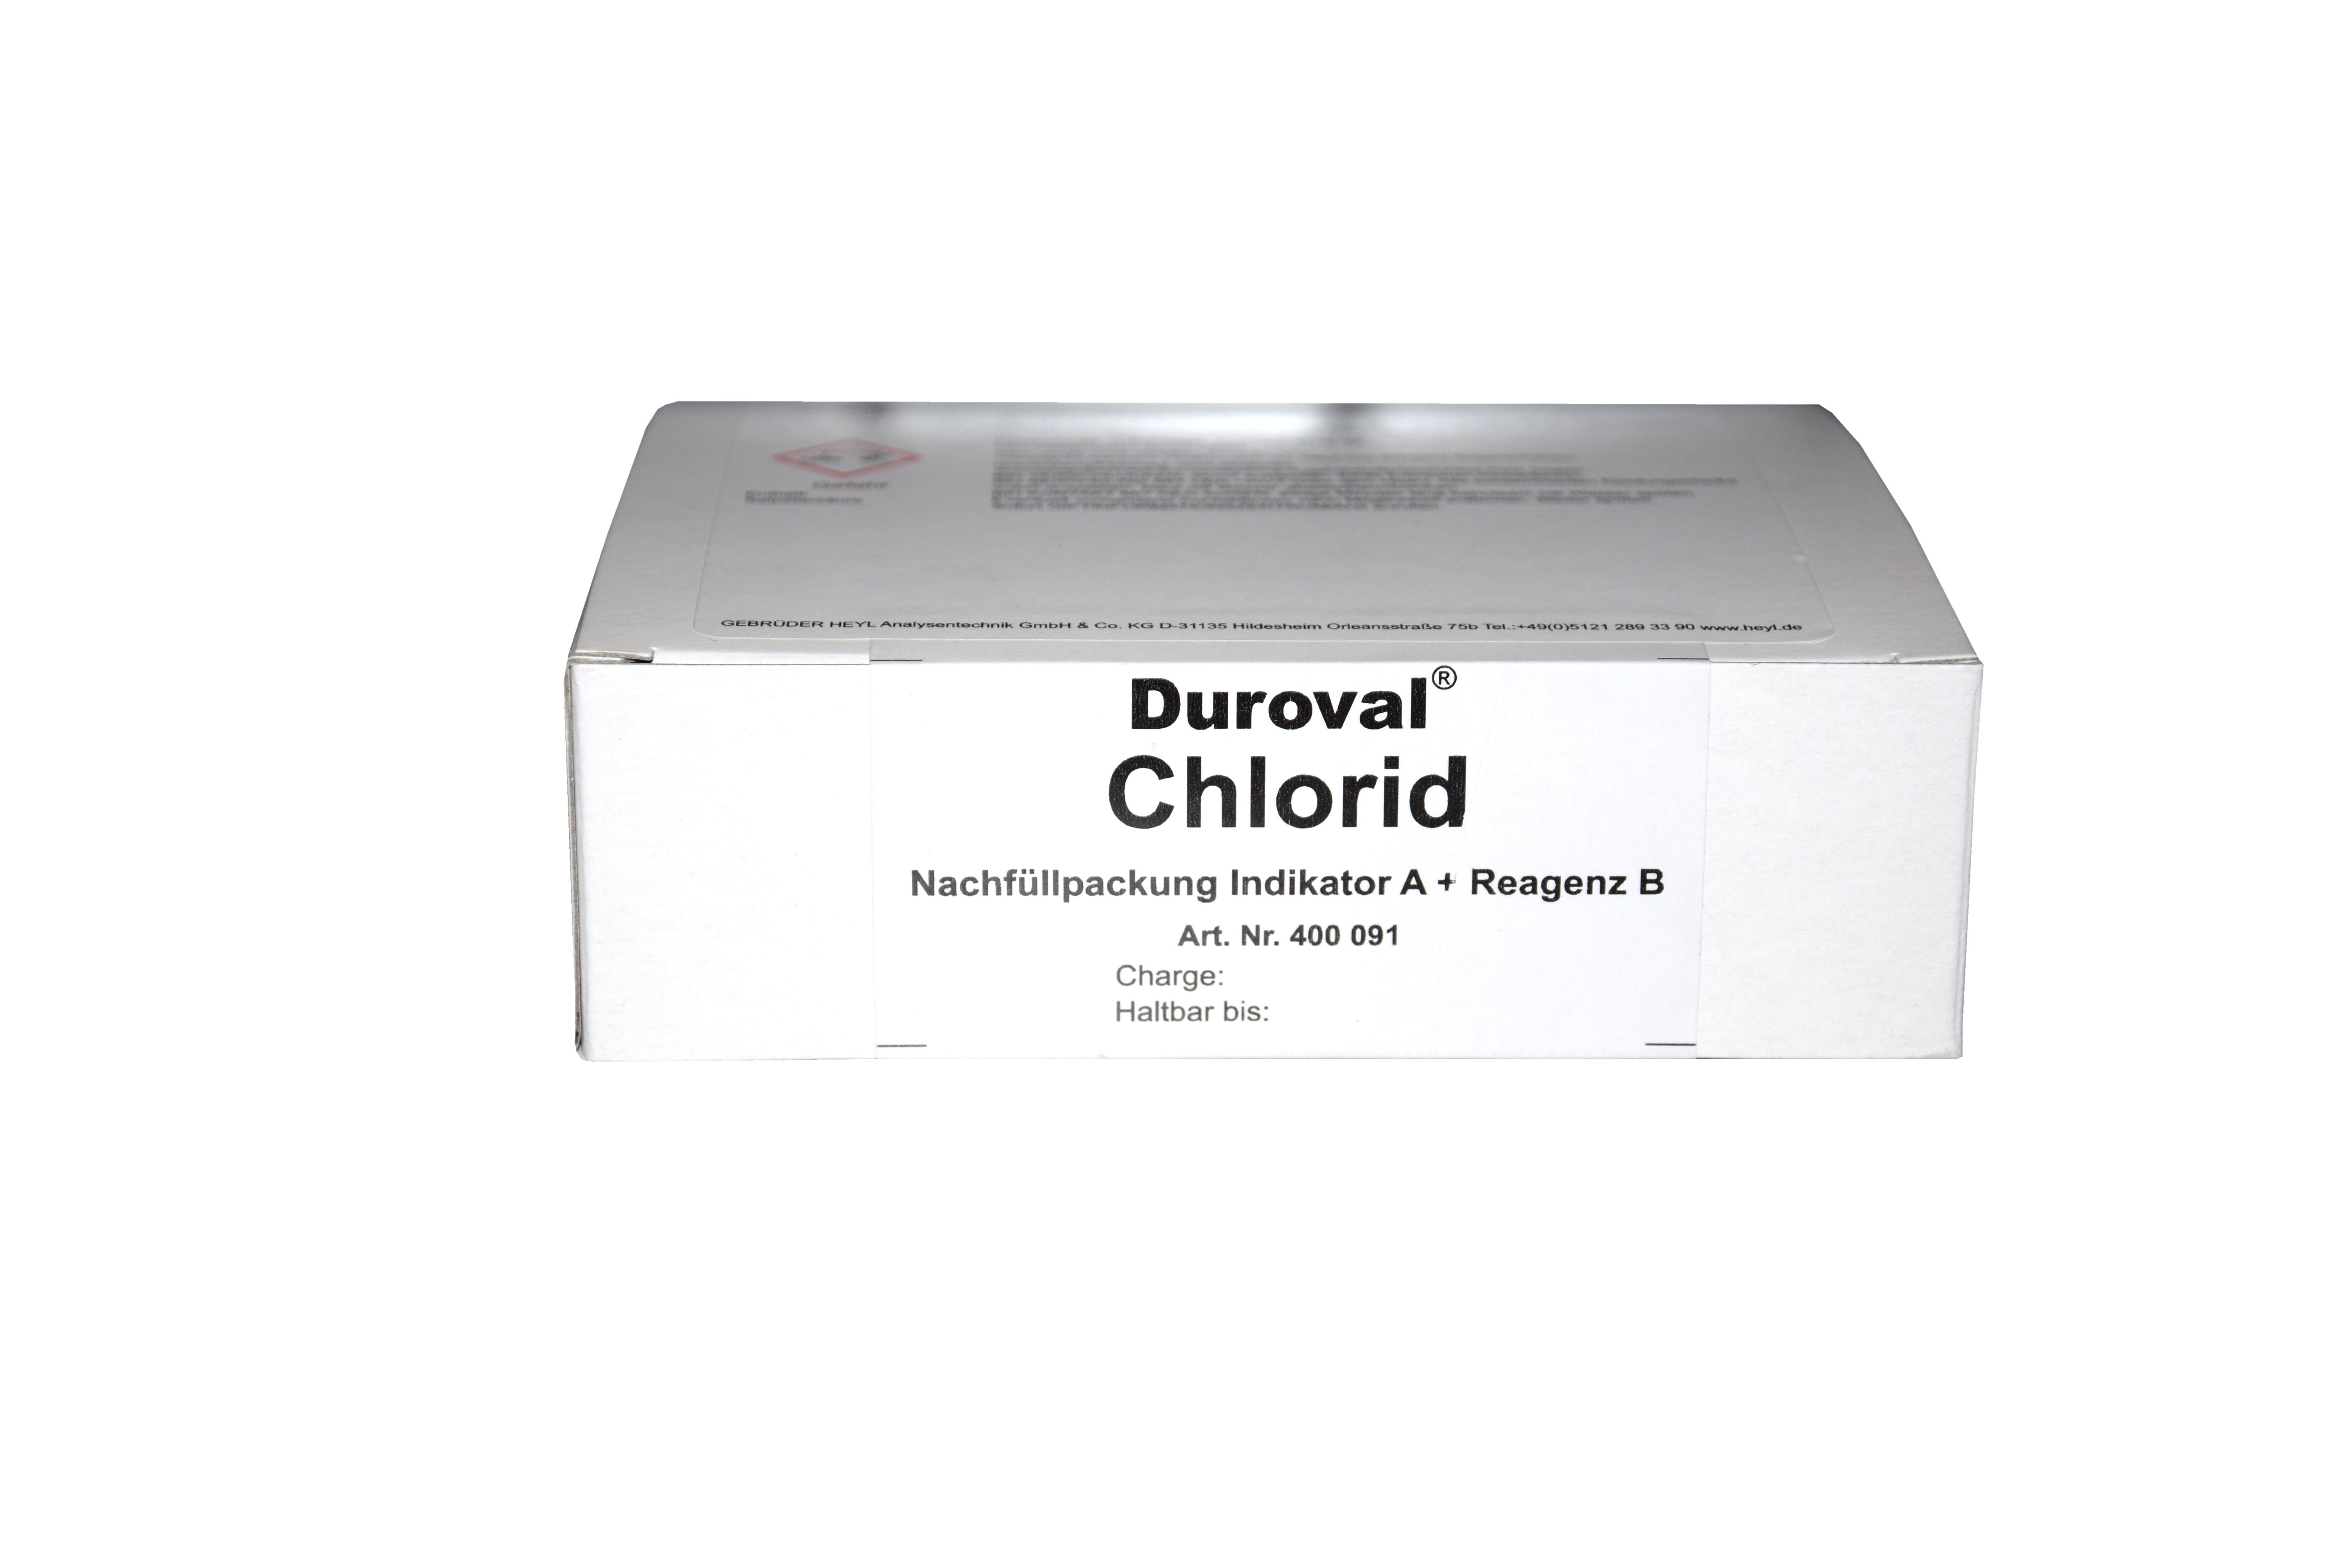 DUROVAL® Chlorid Reagenzien A+B Nachfüllpackung